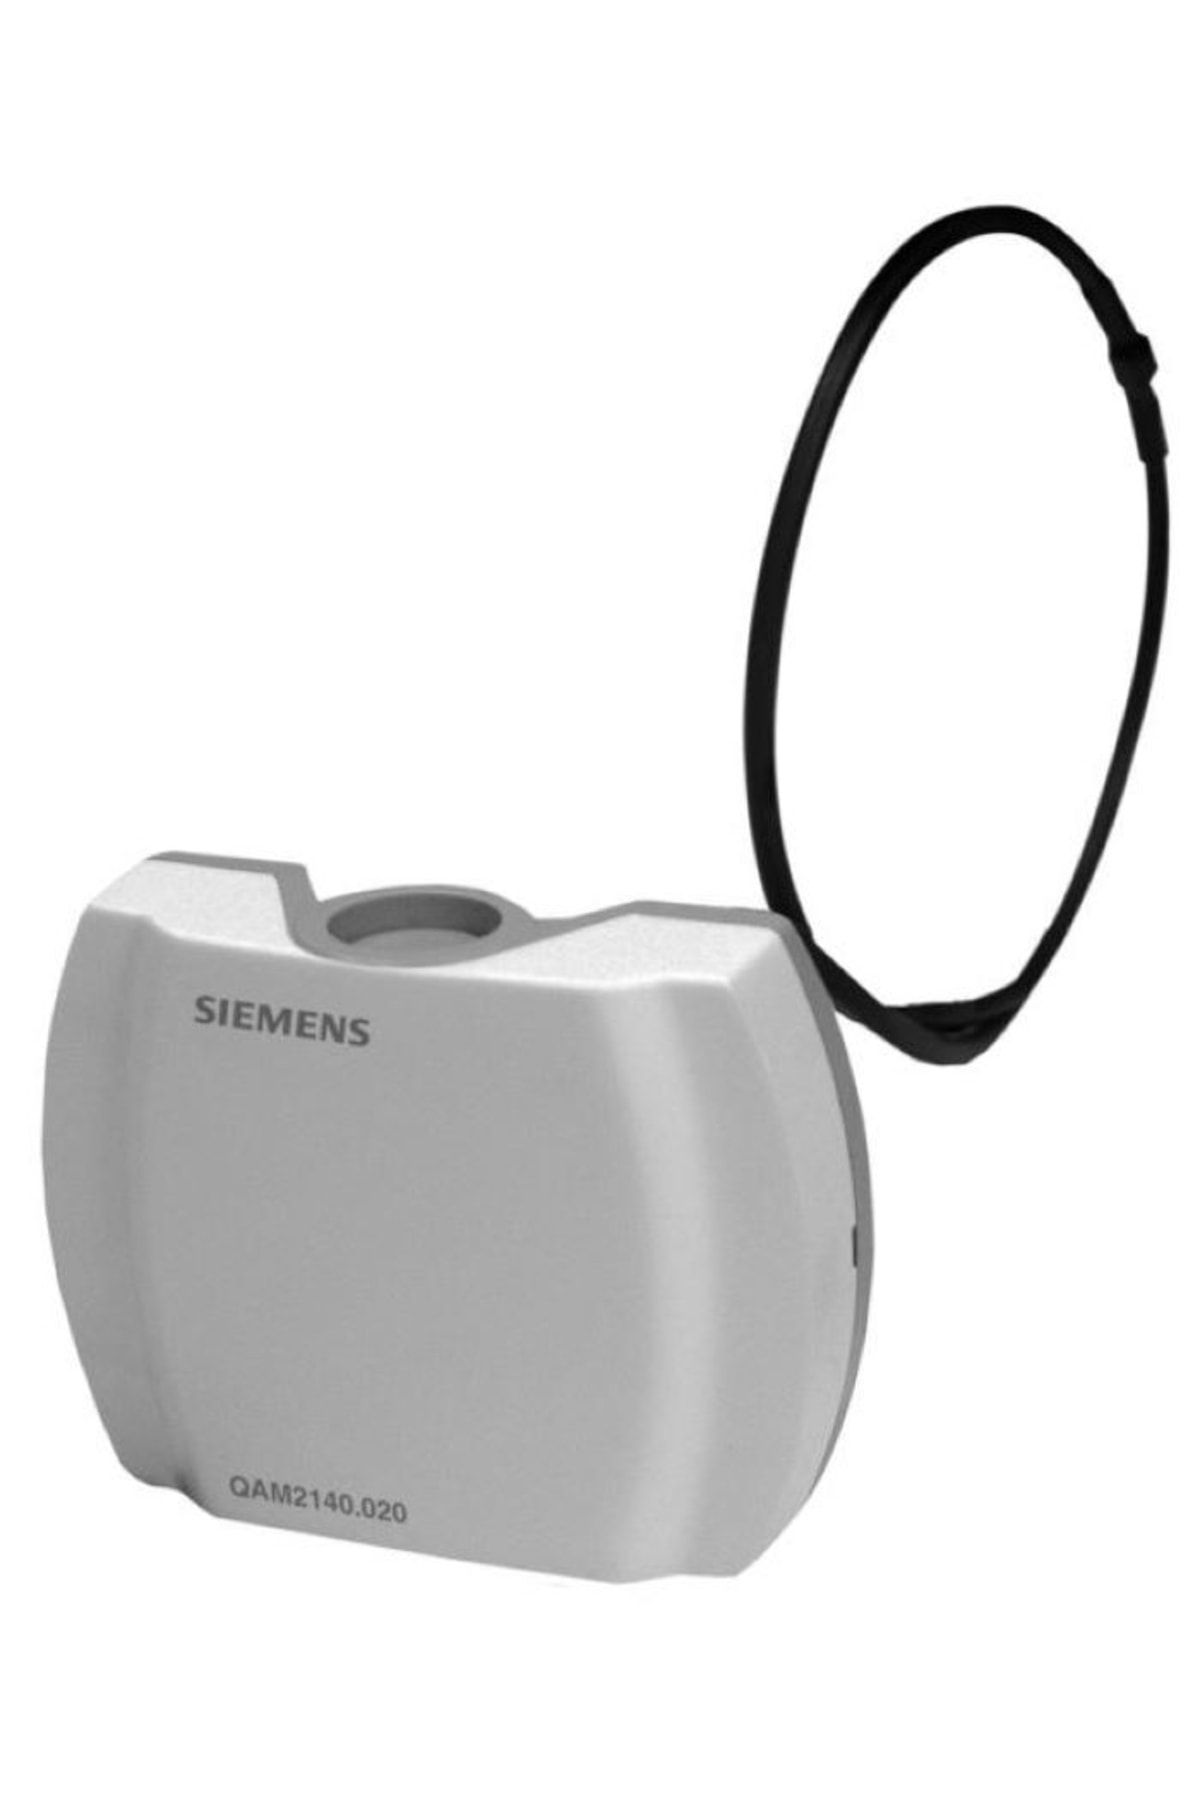 Siemens Qam2112.040 - Daldırma Tip Sıcaklık Sensörü